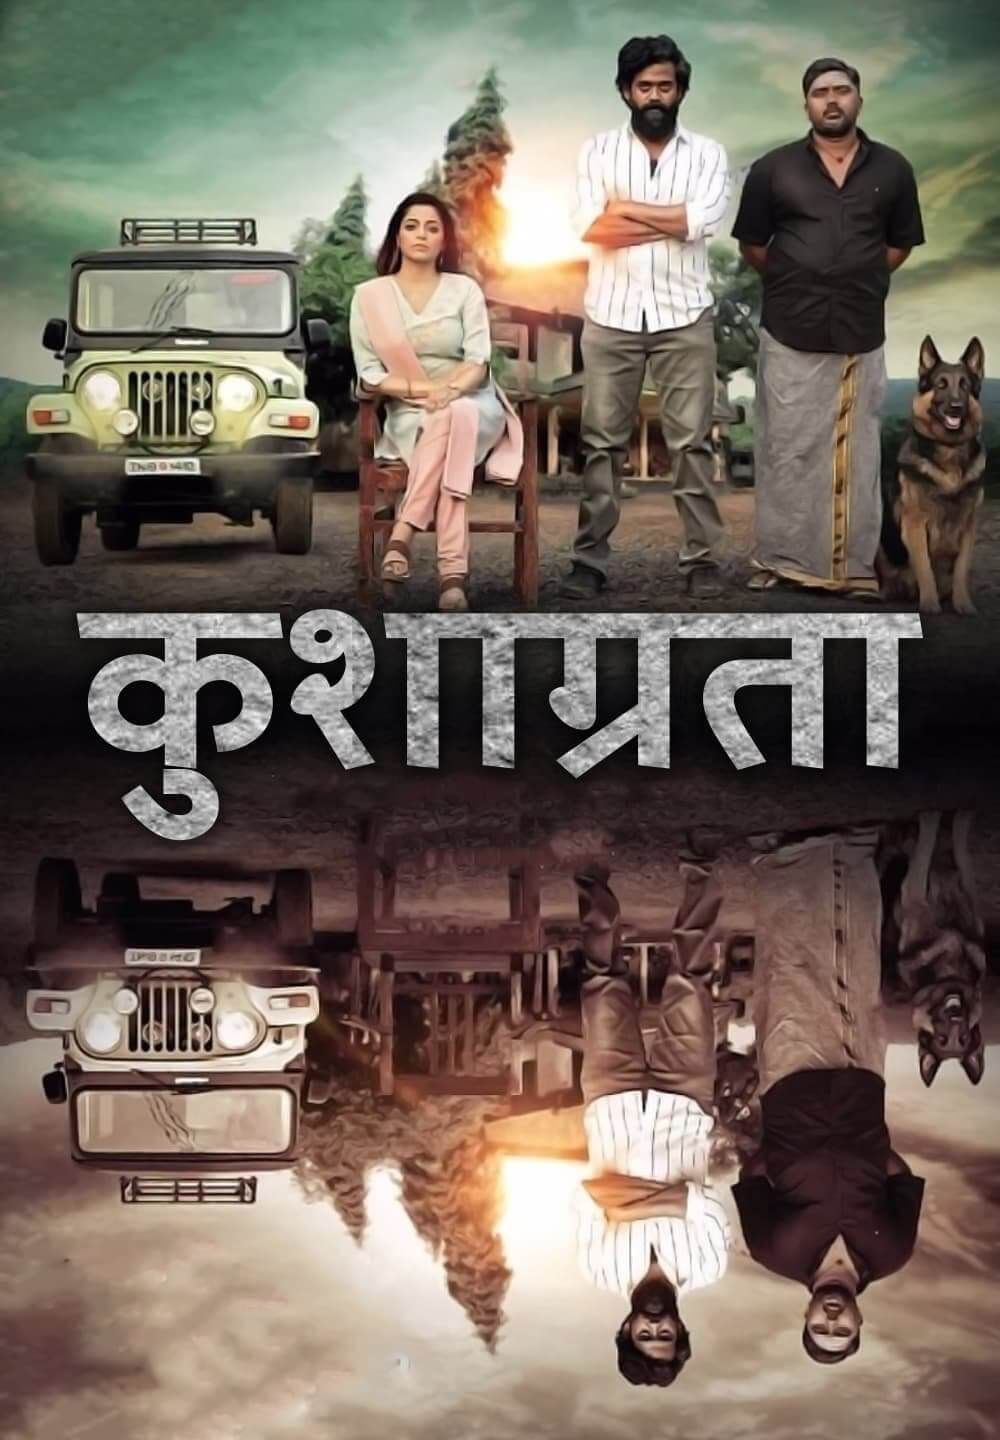 Koorman (2022) Hindi Dubbed HDRip download full movie